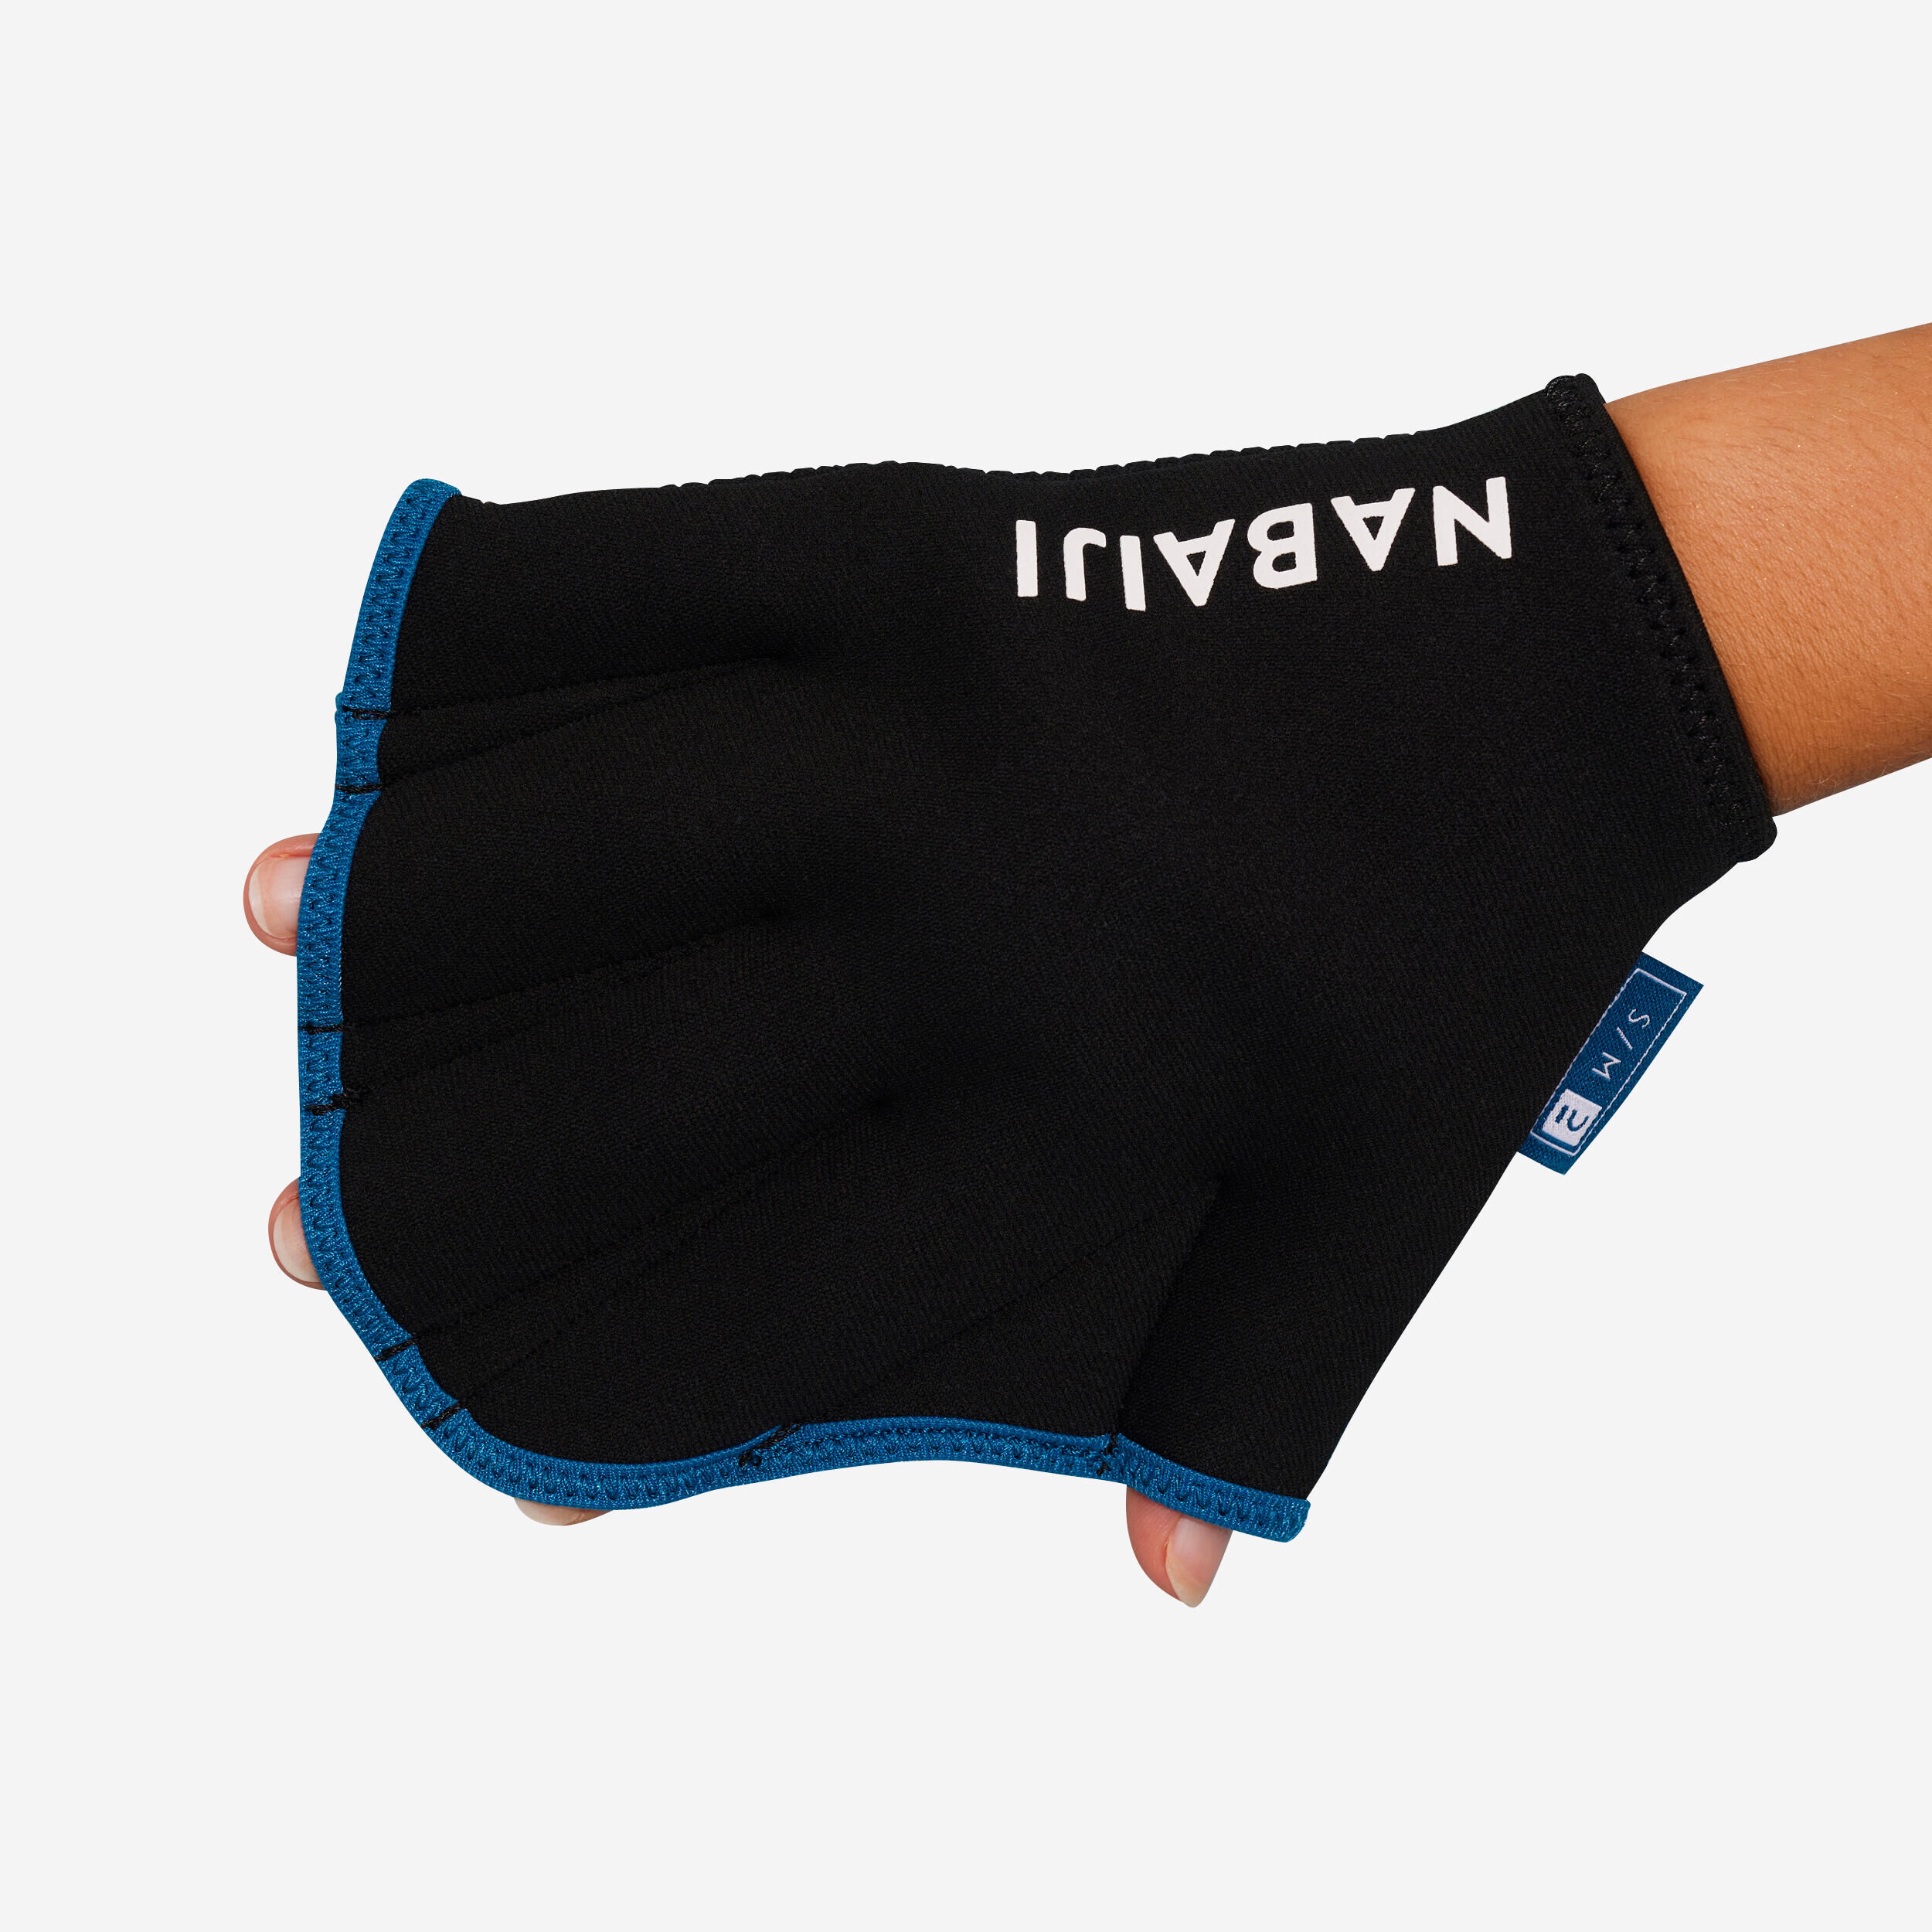 NABAIJI Pair of Aquafitness Neoprene Webbed Gloves black blue